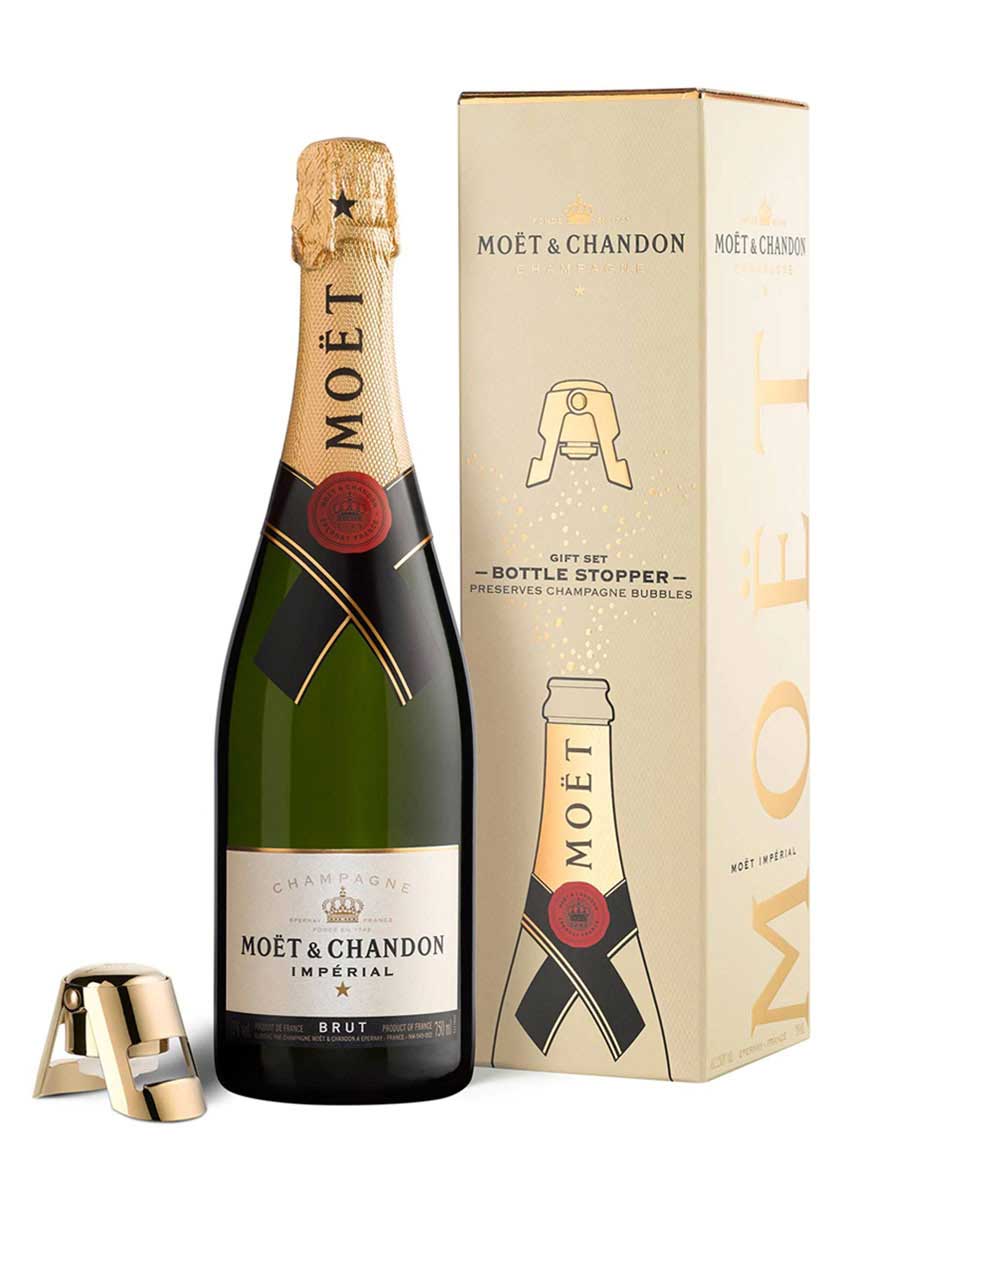 Champagne Moet & Chandon, Brut Imperial, gift box, 750 ml Moet